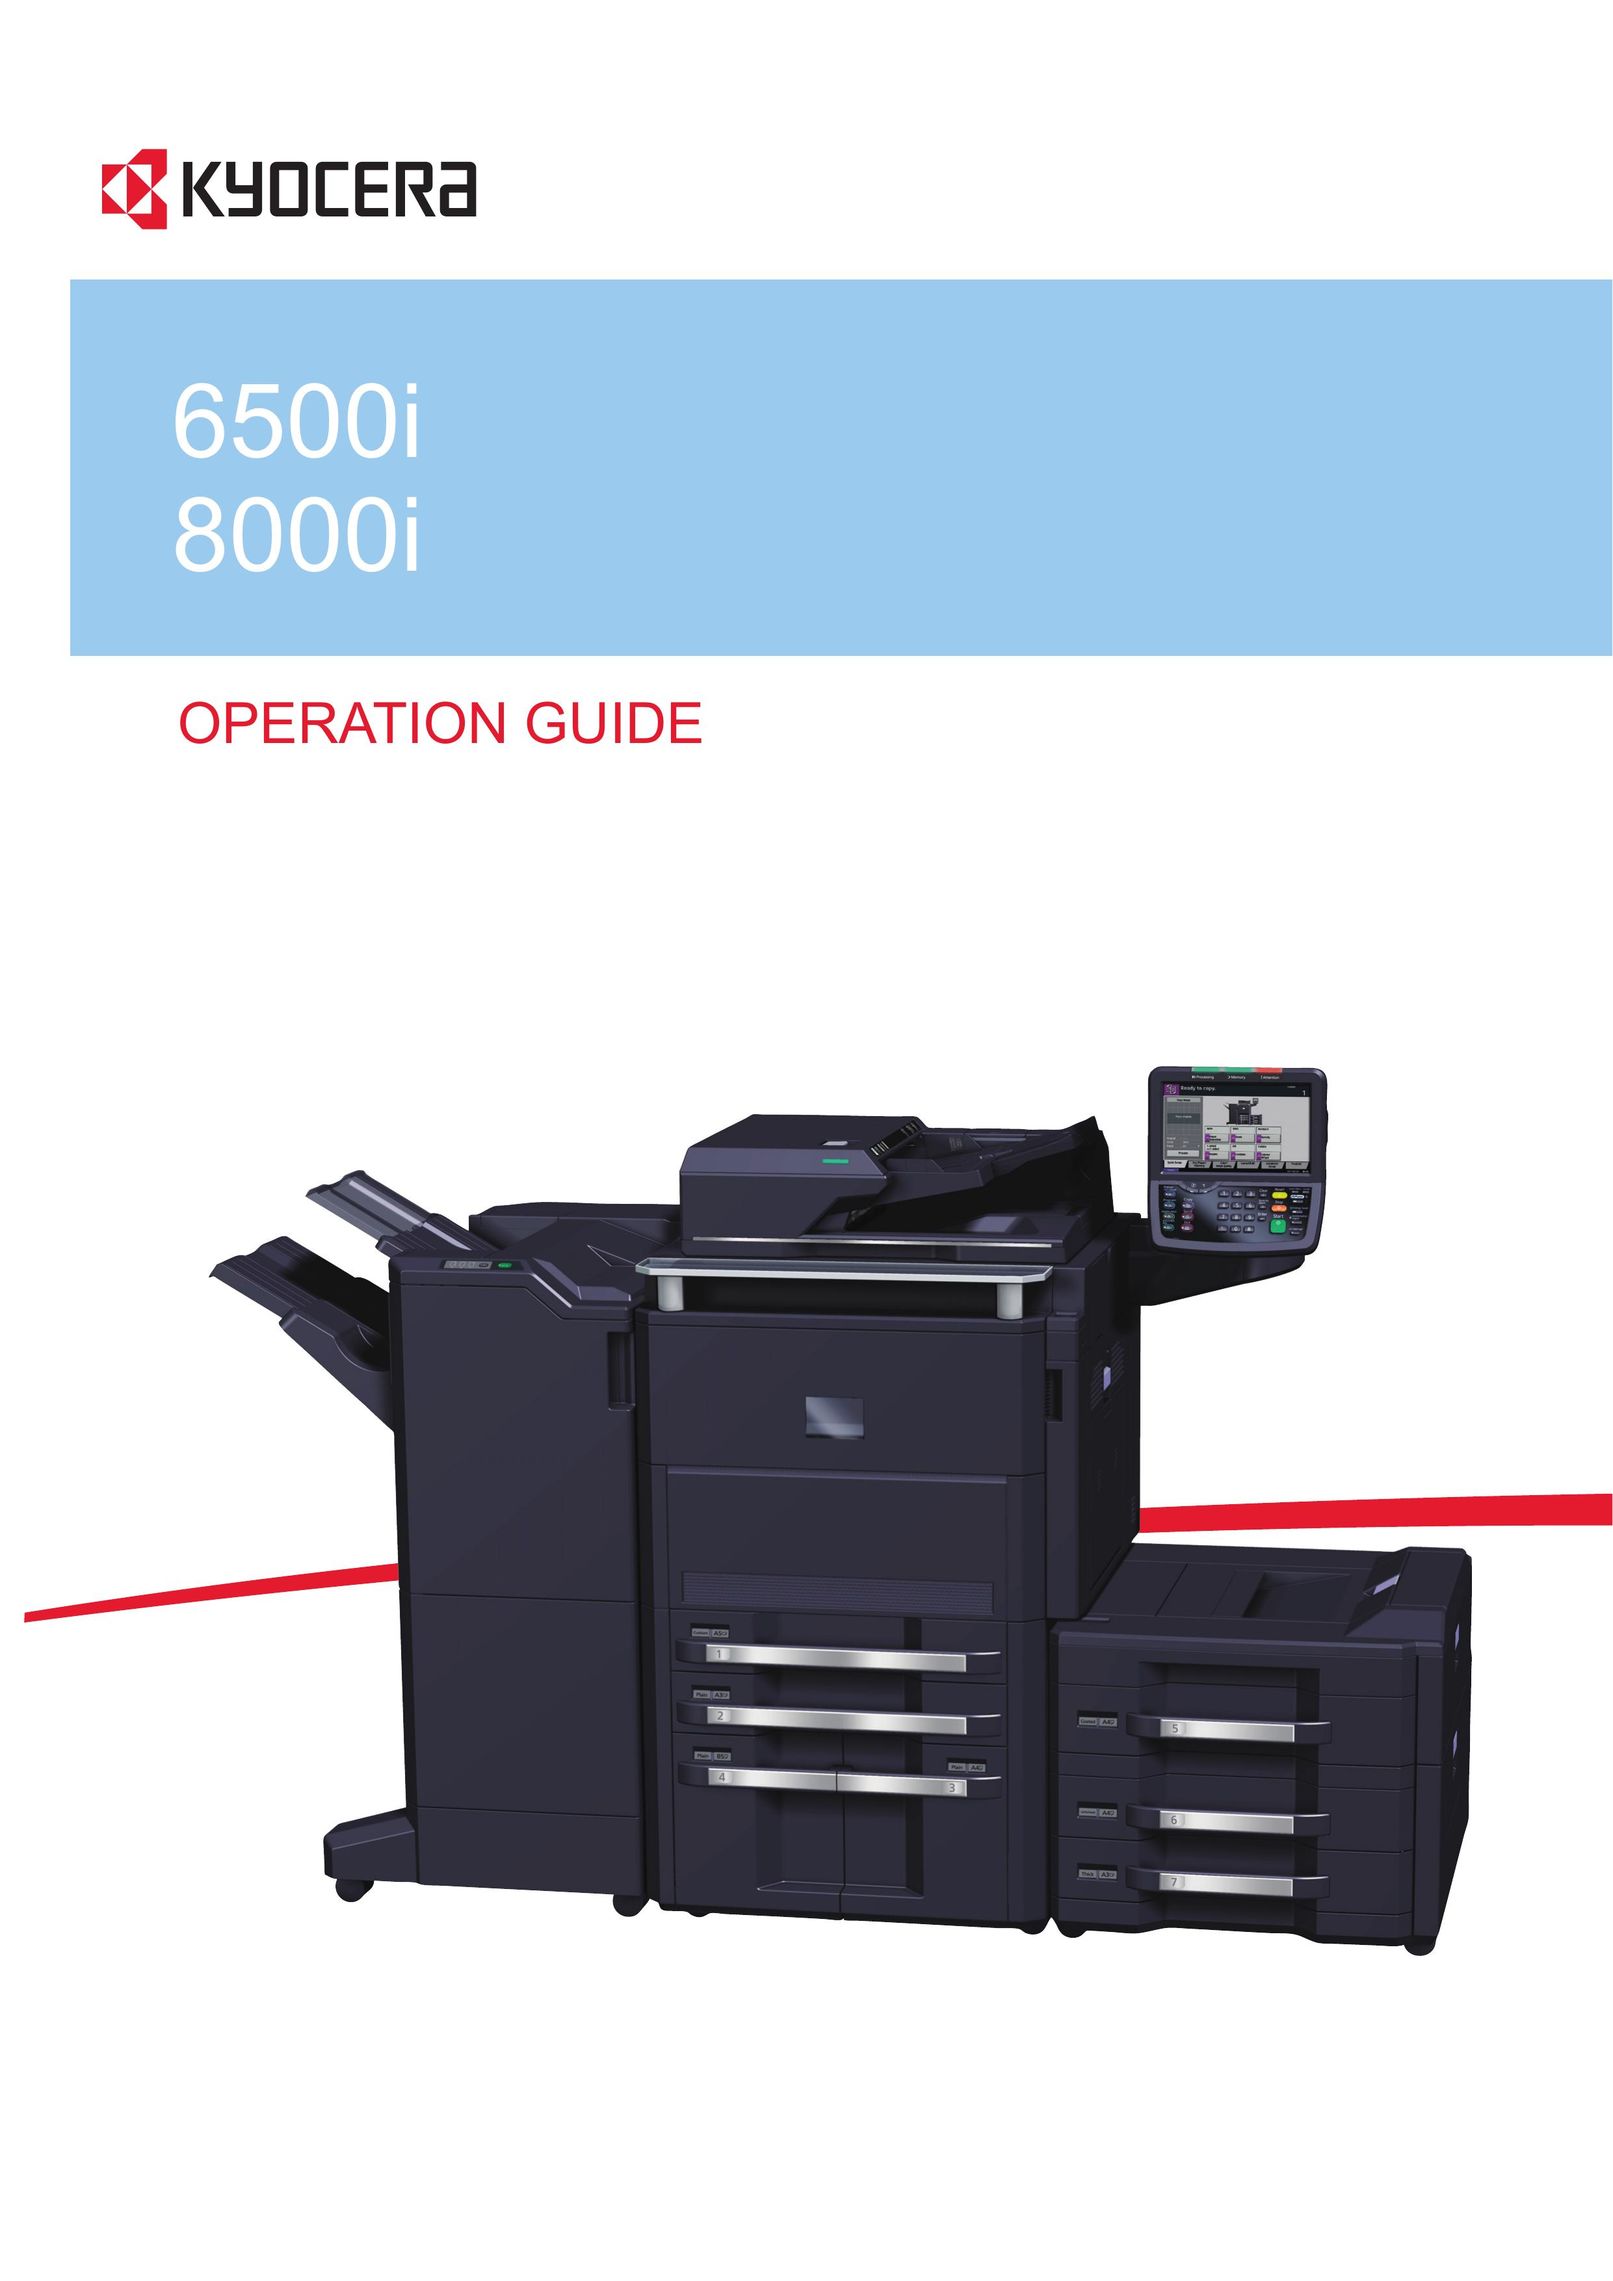 Kyocera 6500i All in One Printer User Manual